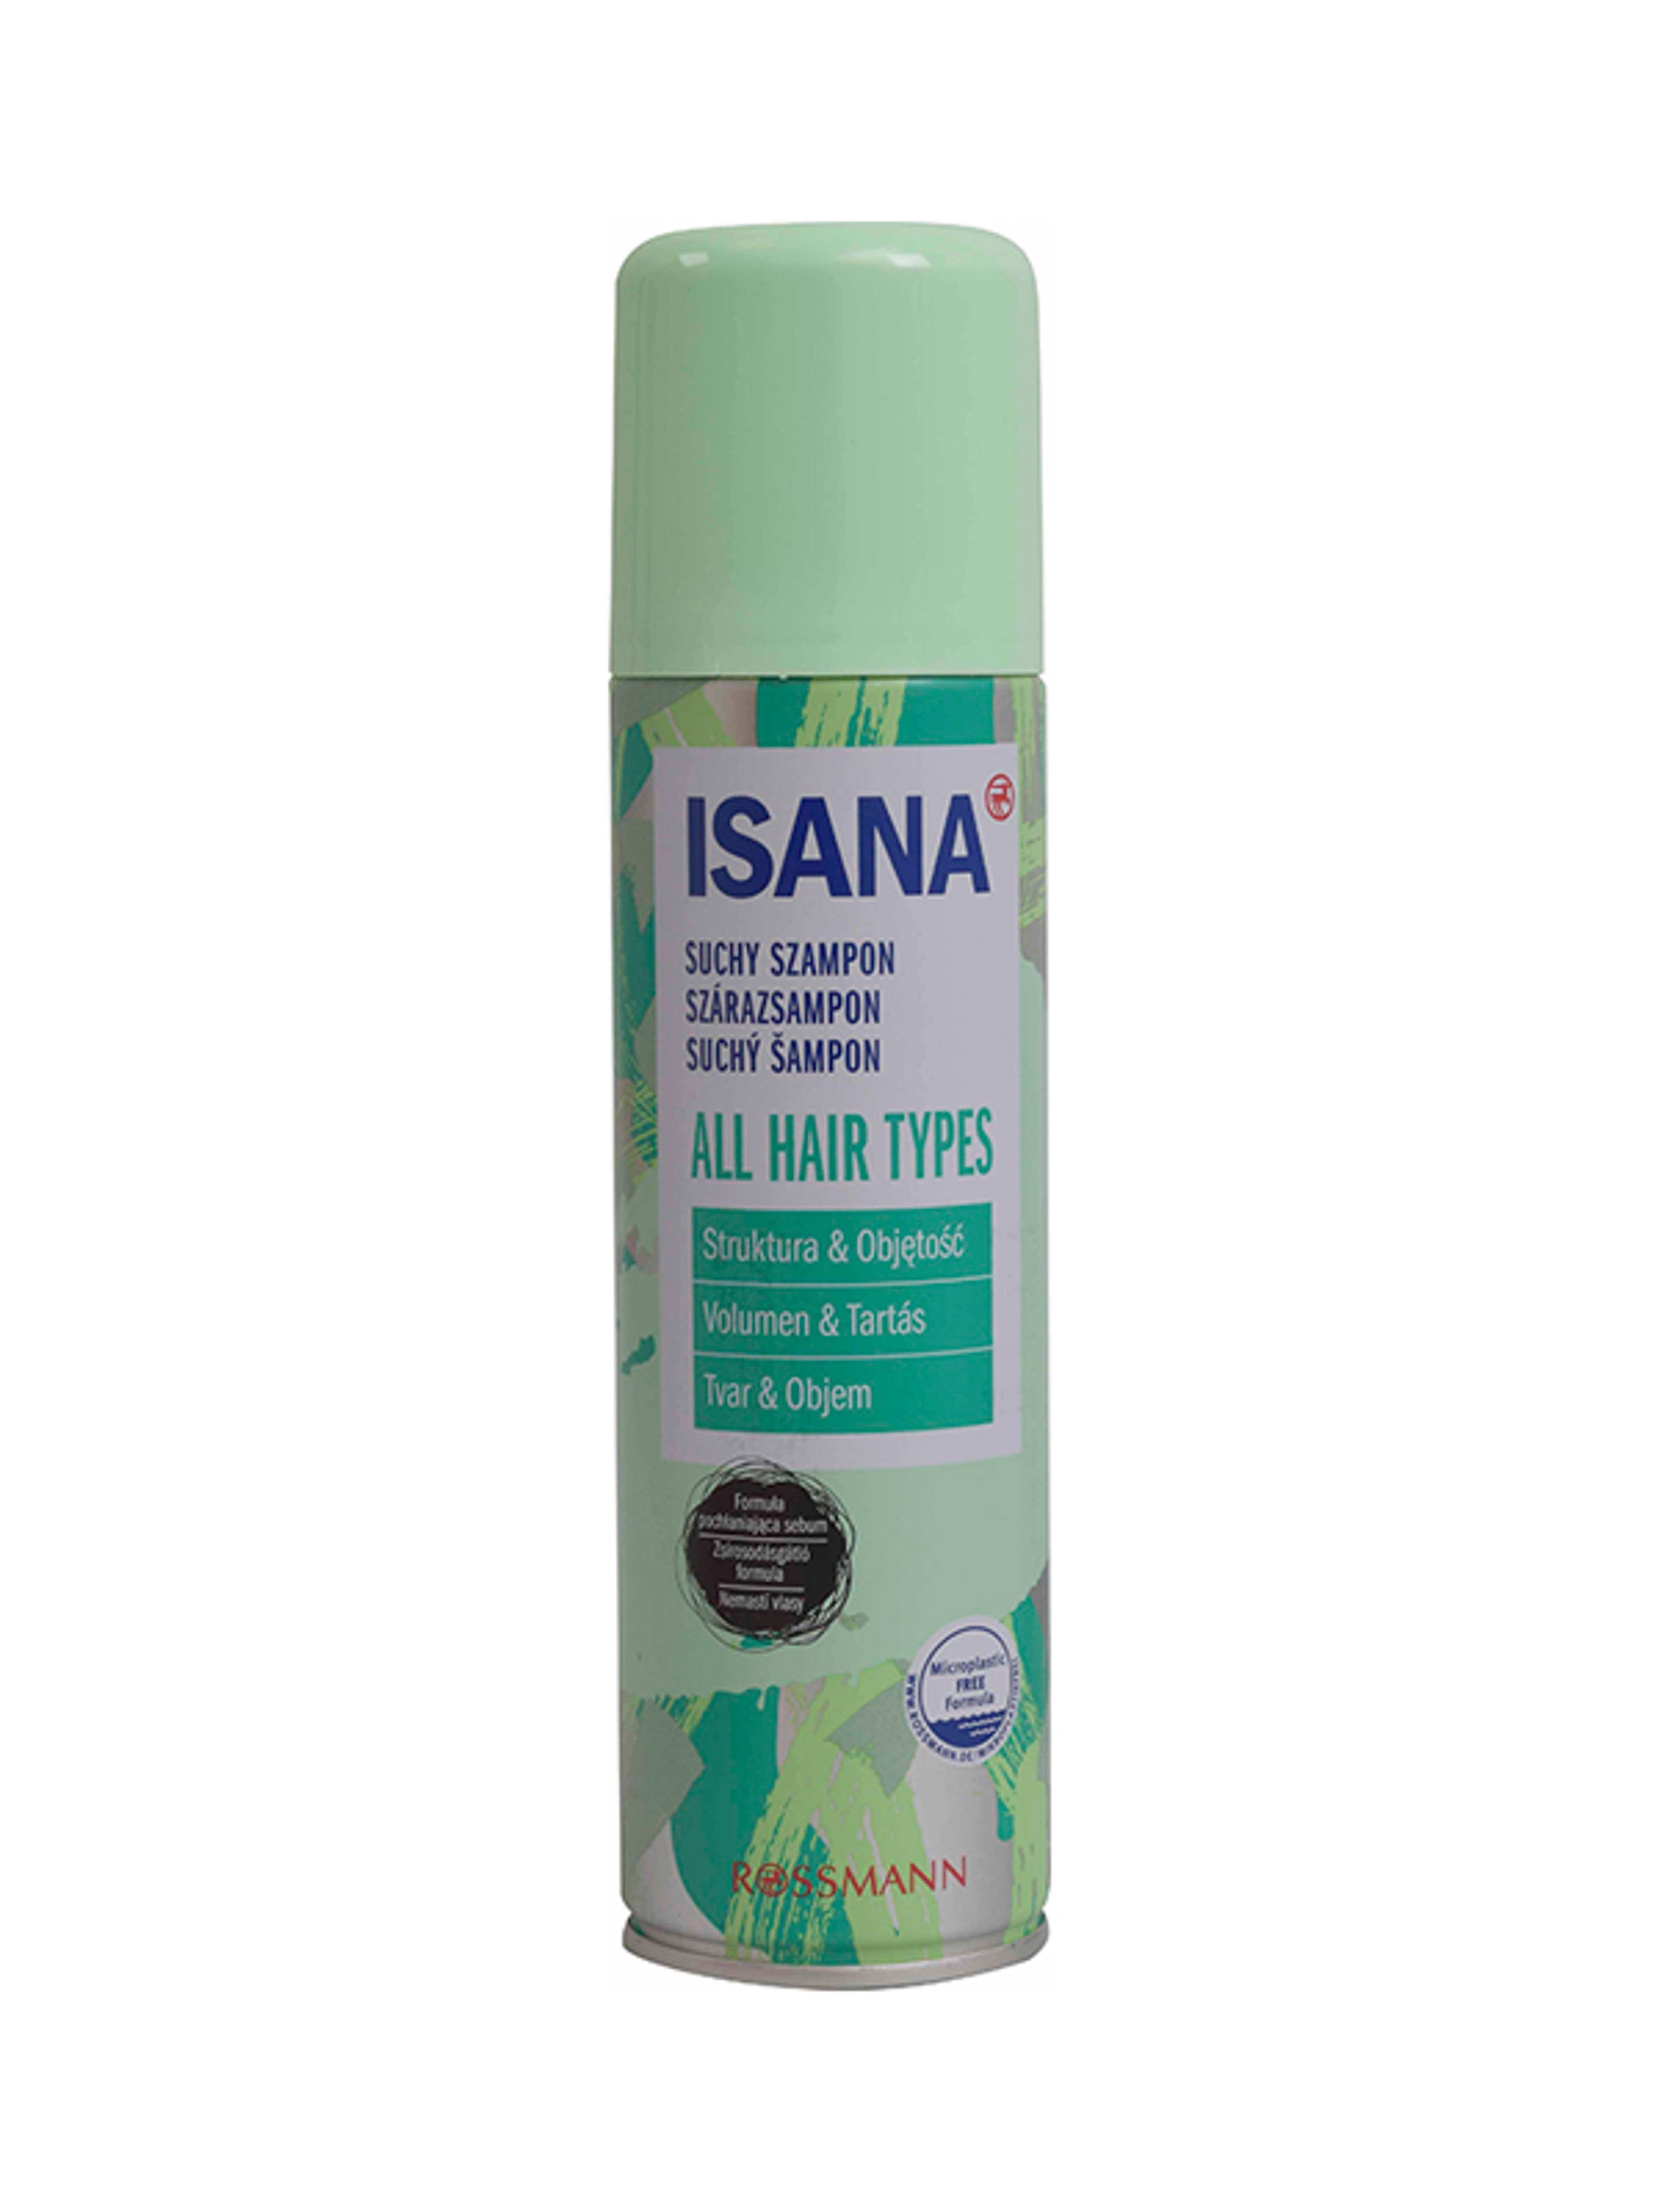 Isana Hair szárazsampon - 200 ml-1